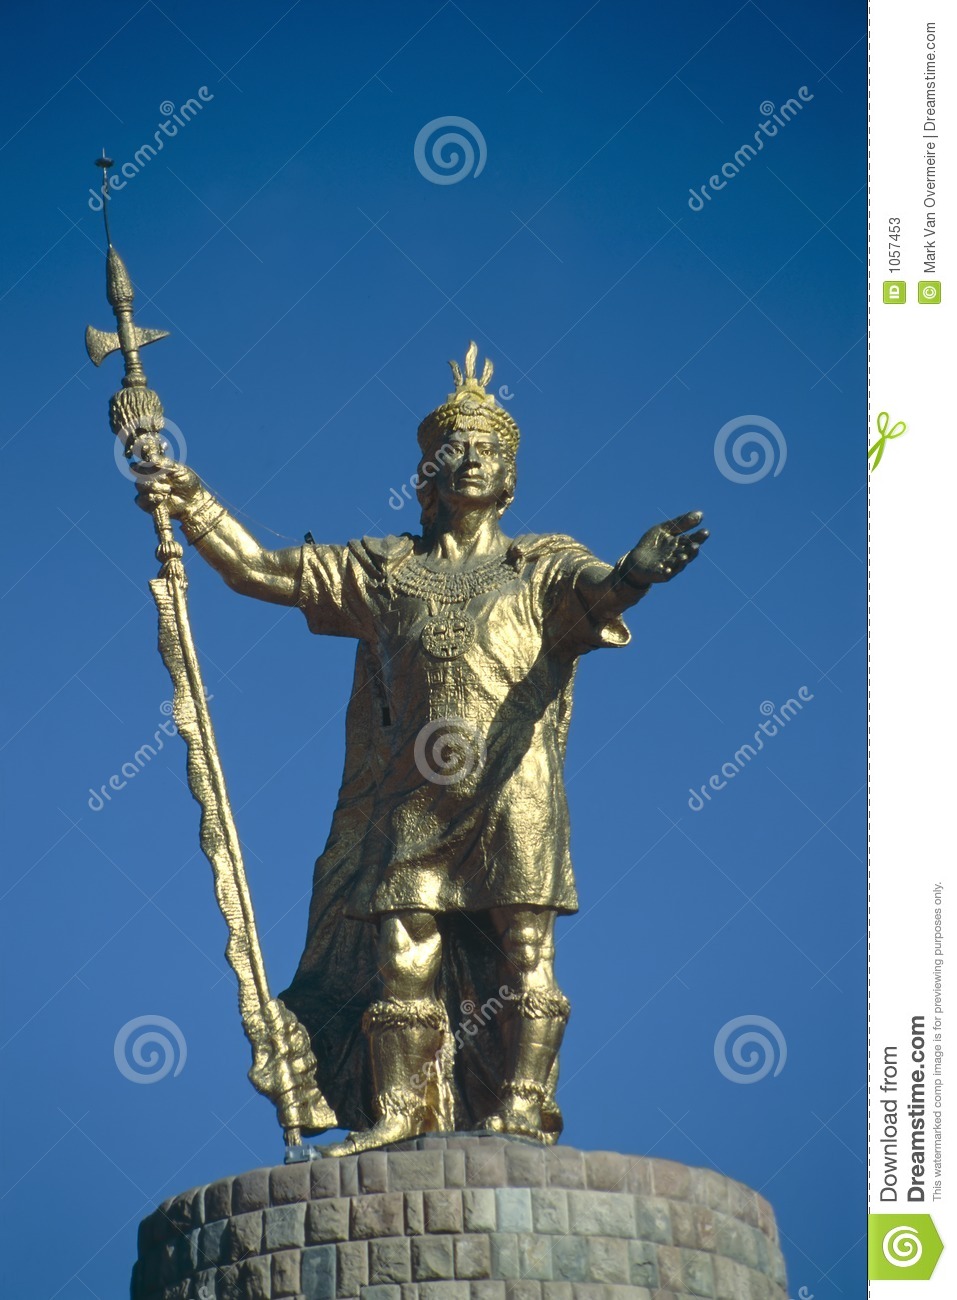 Golden Statue Of The Inca King Atahualpa In Cuzco Peru